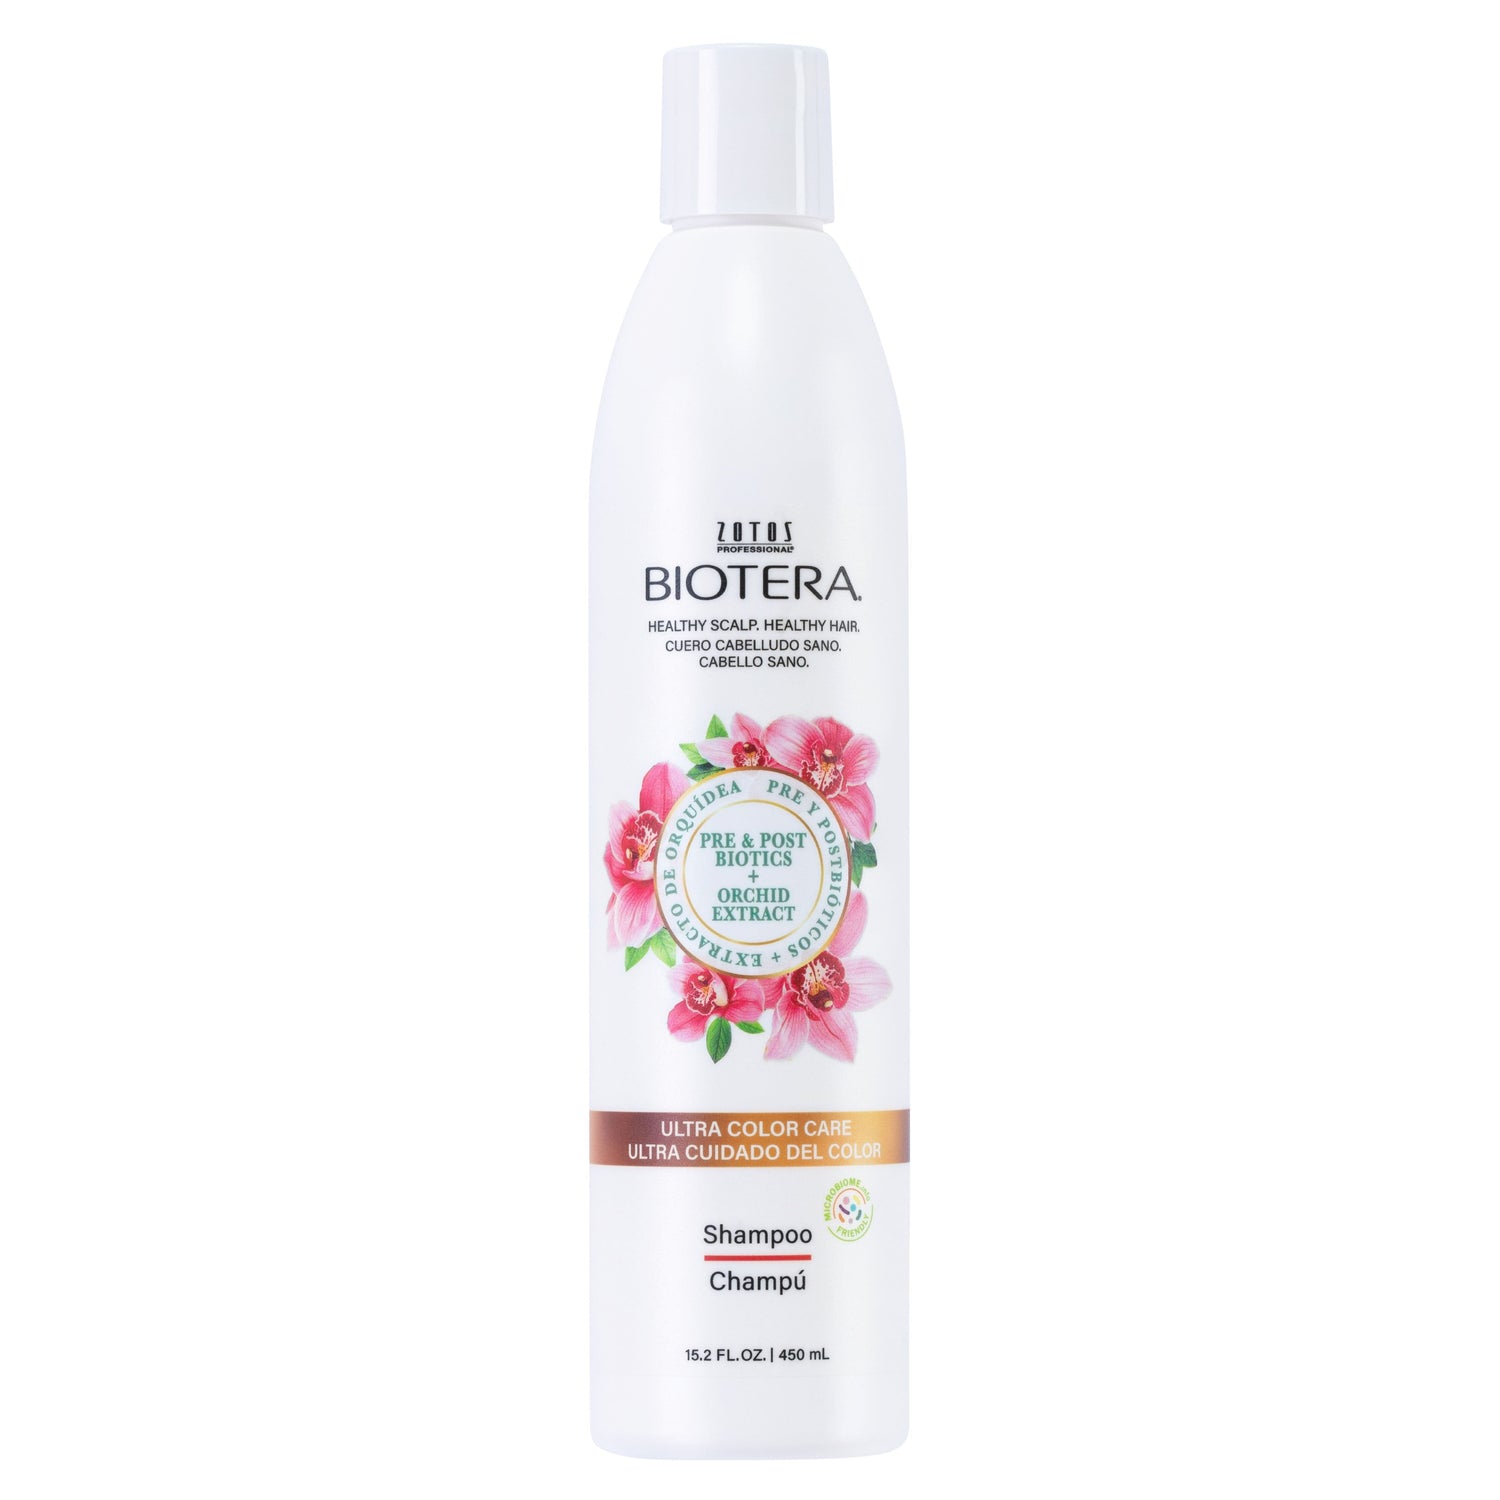 Biotera® Ultra Color Care Shampoo